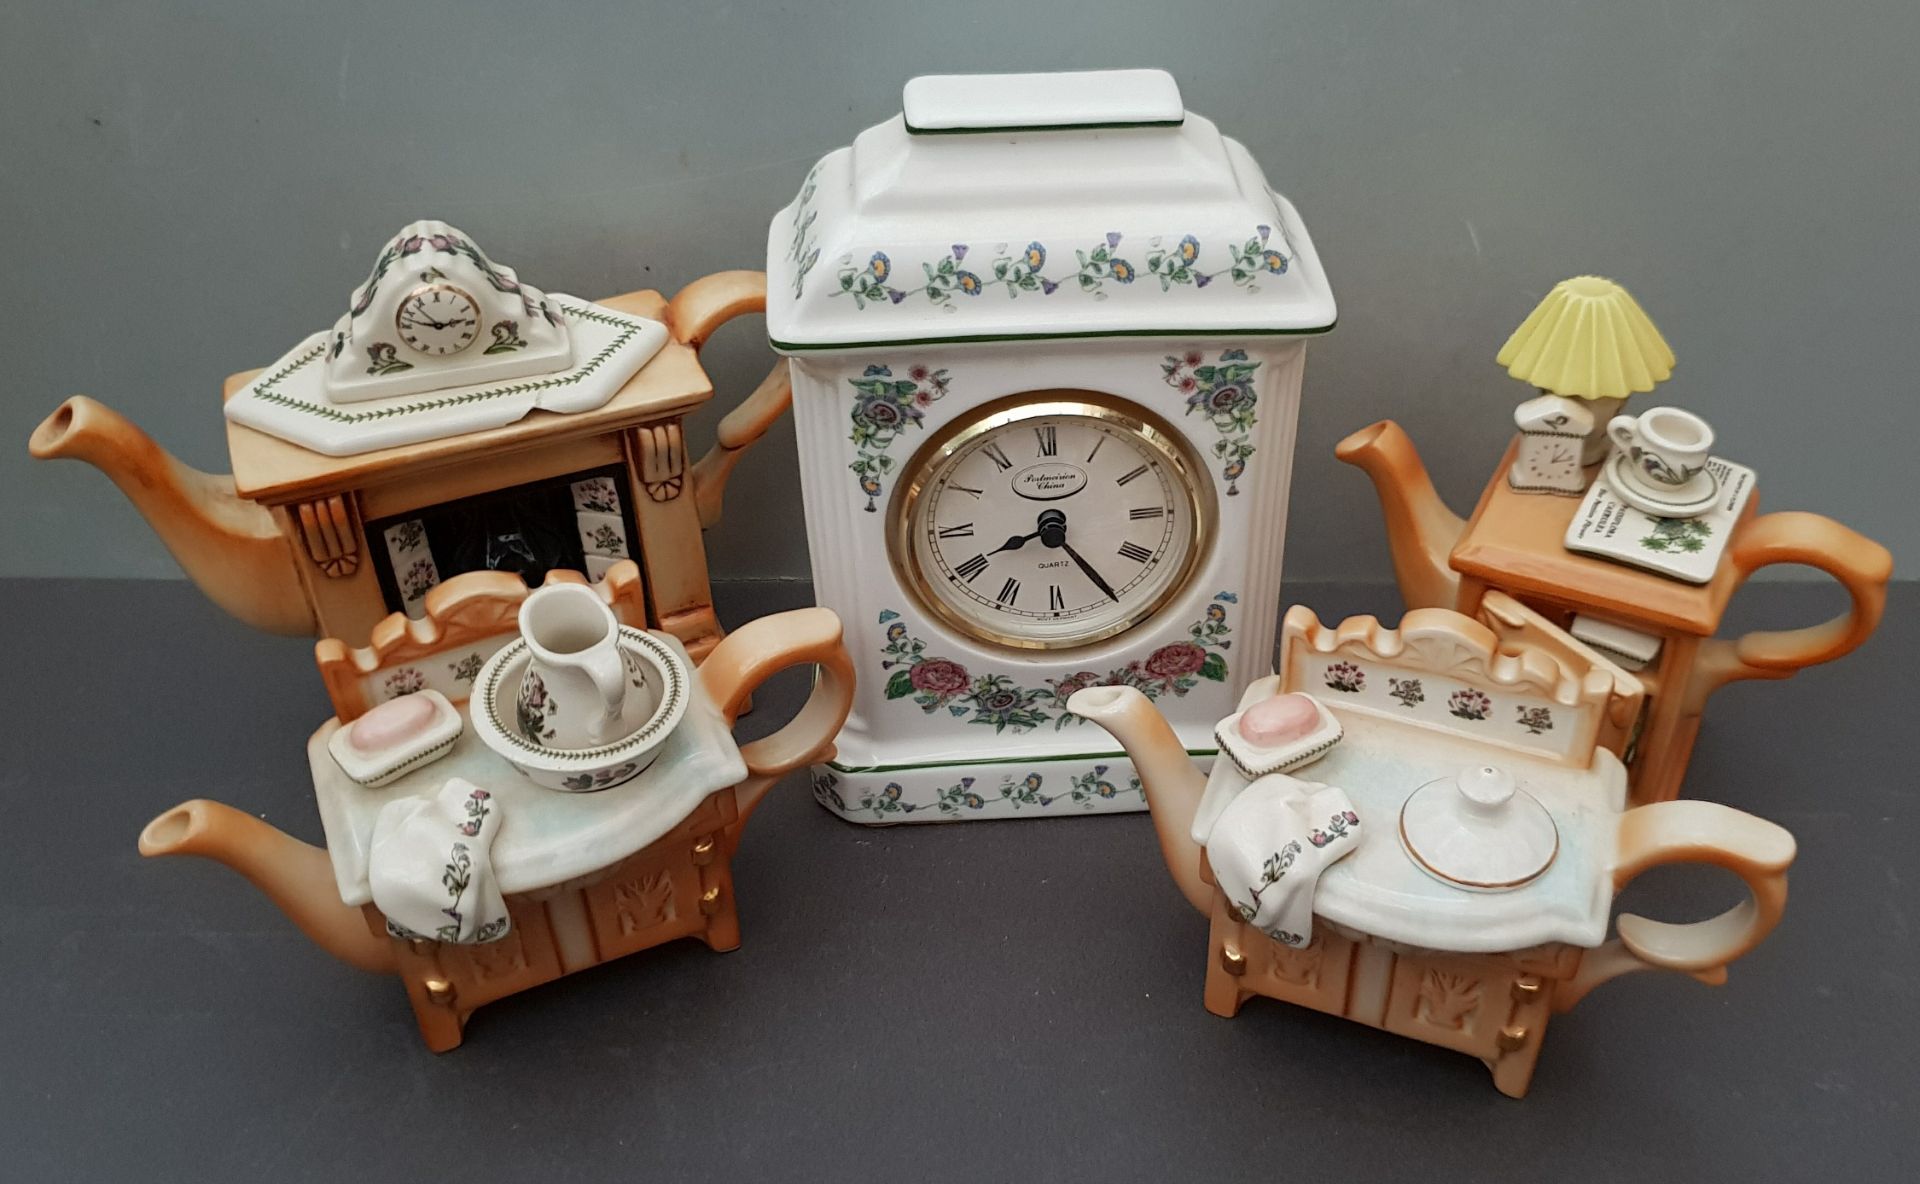 Vintage Retro Collection 4 x Portmeirion Novelty Teapots Size 1 cup Plus Clock. Part of a recent